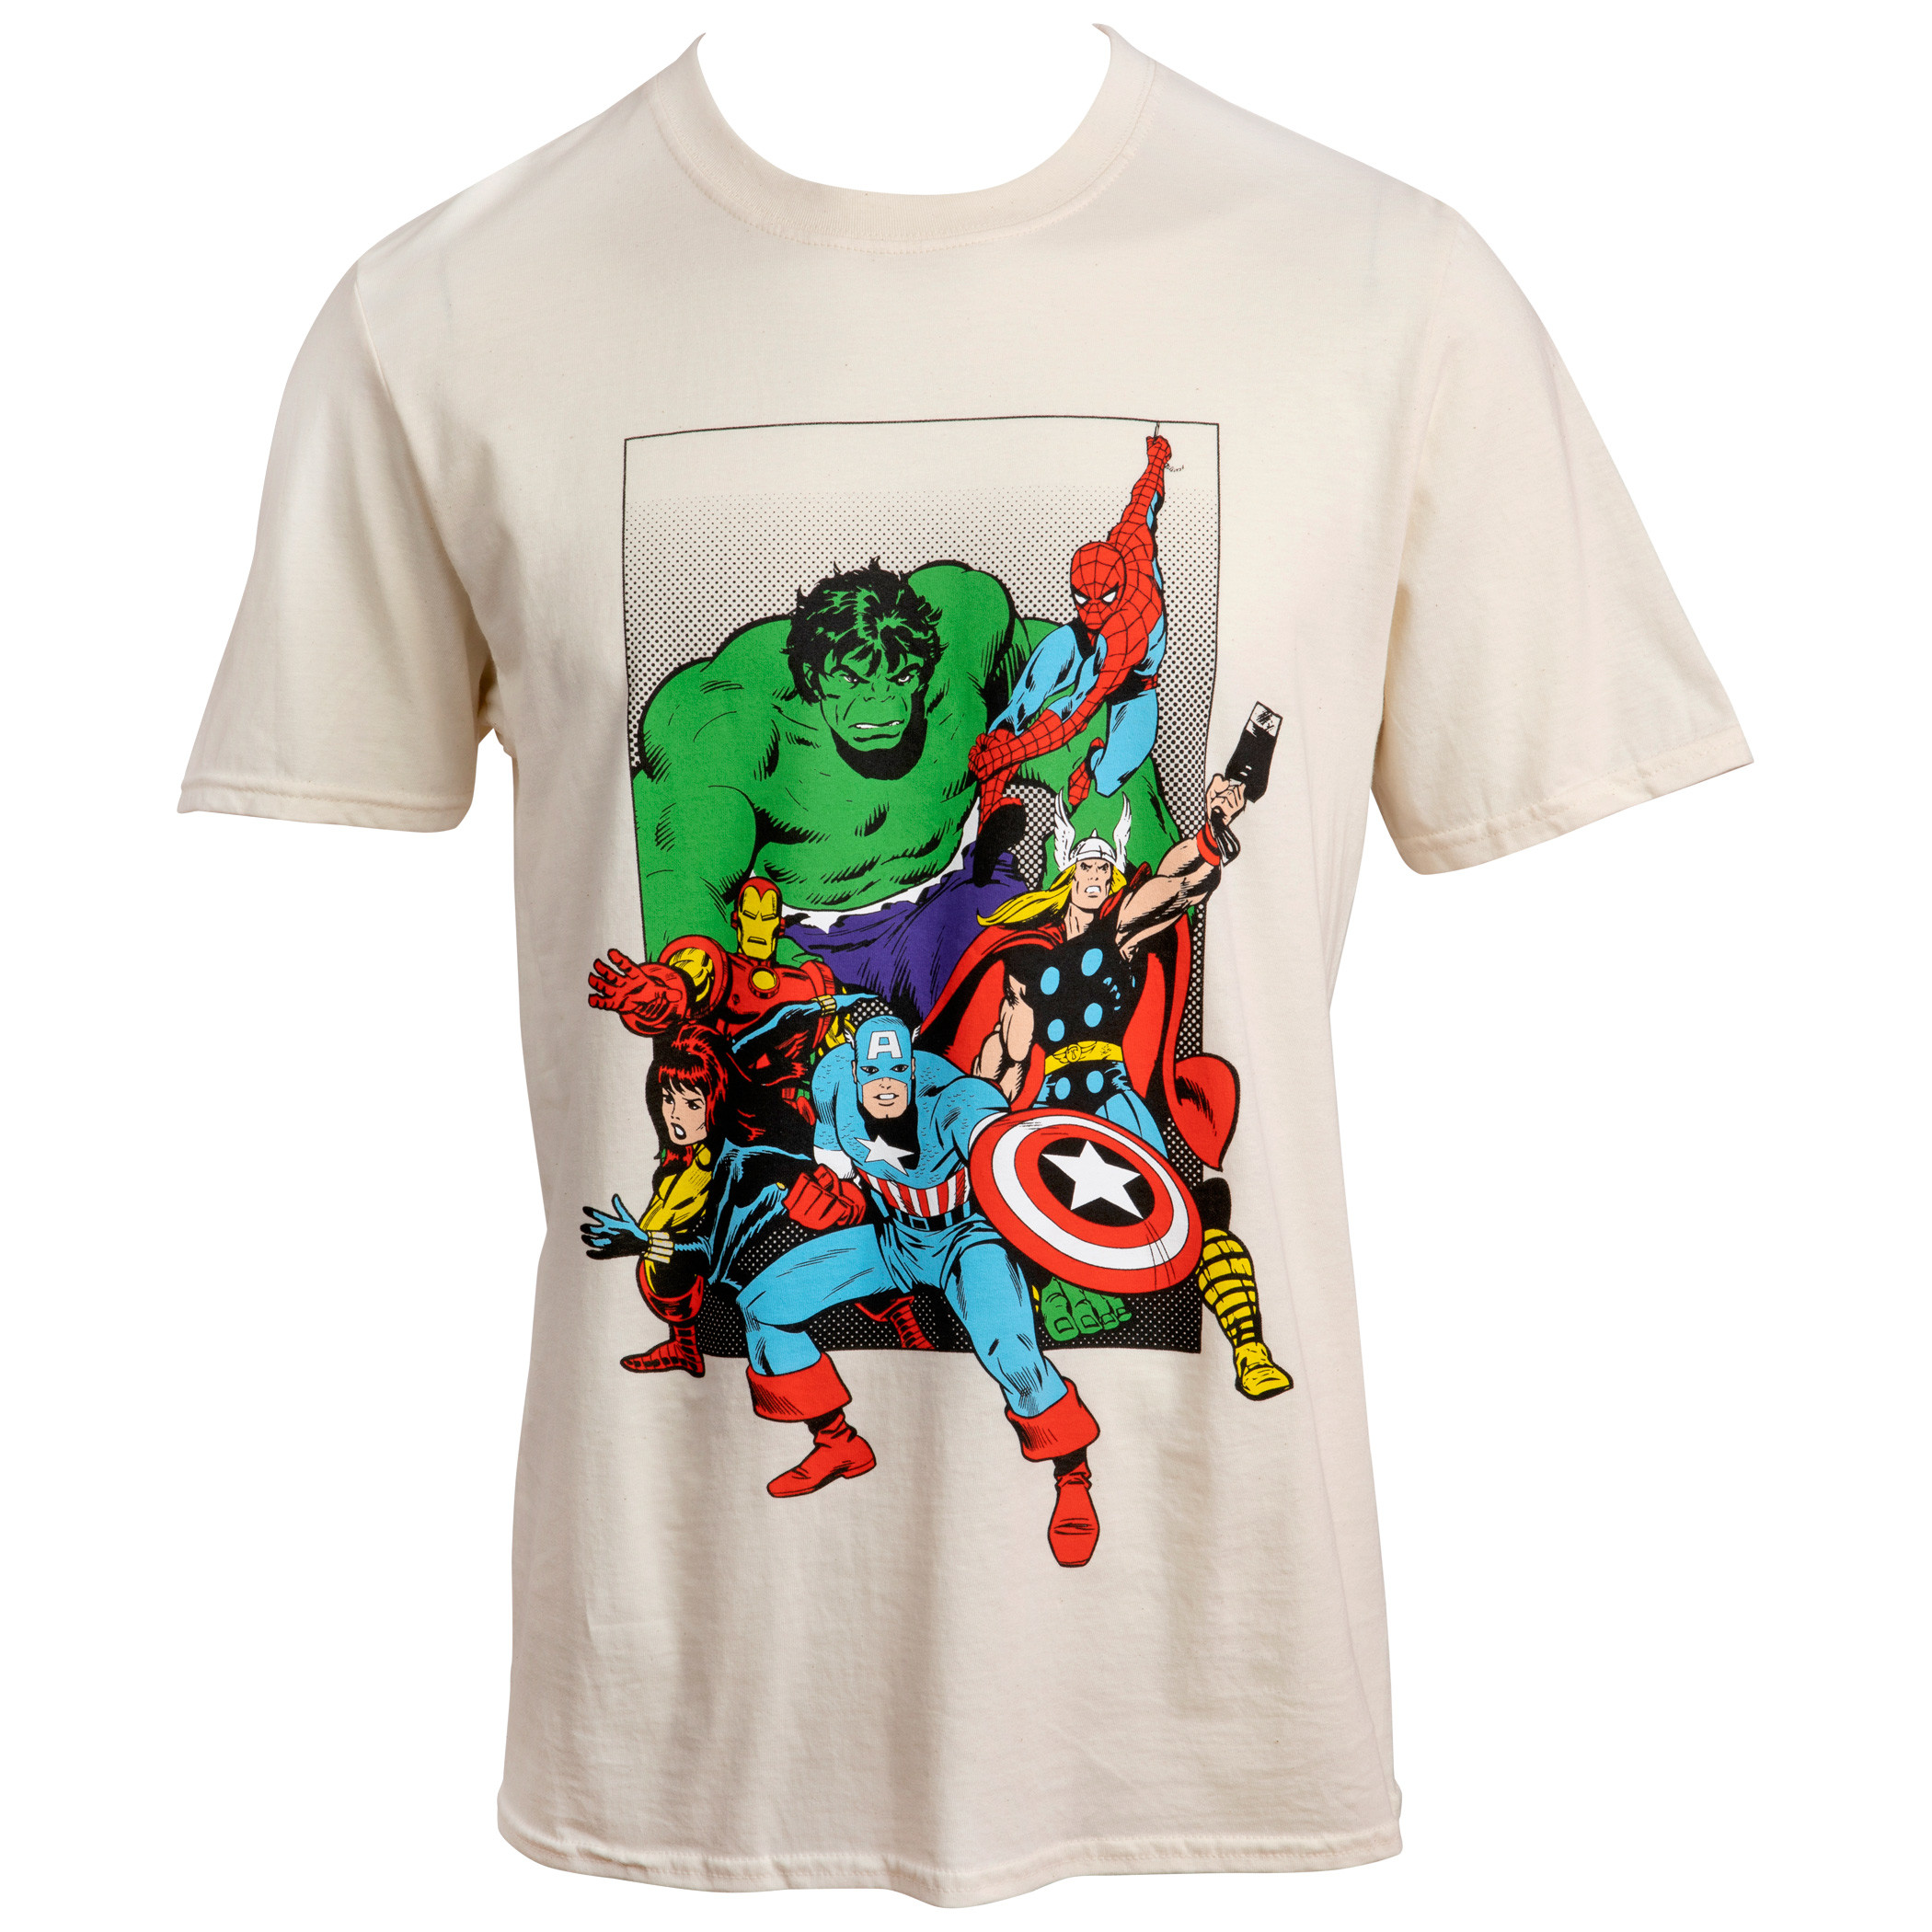 The Comics Marvel Avengers Group Stance T-Shirt